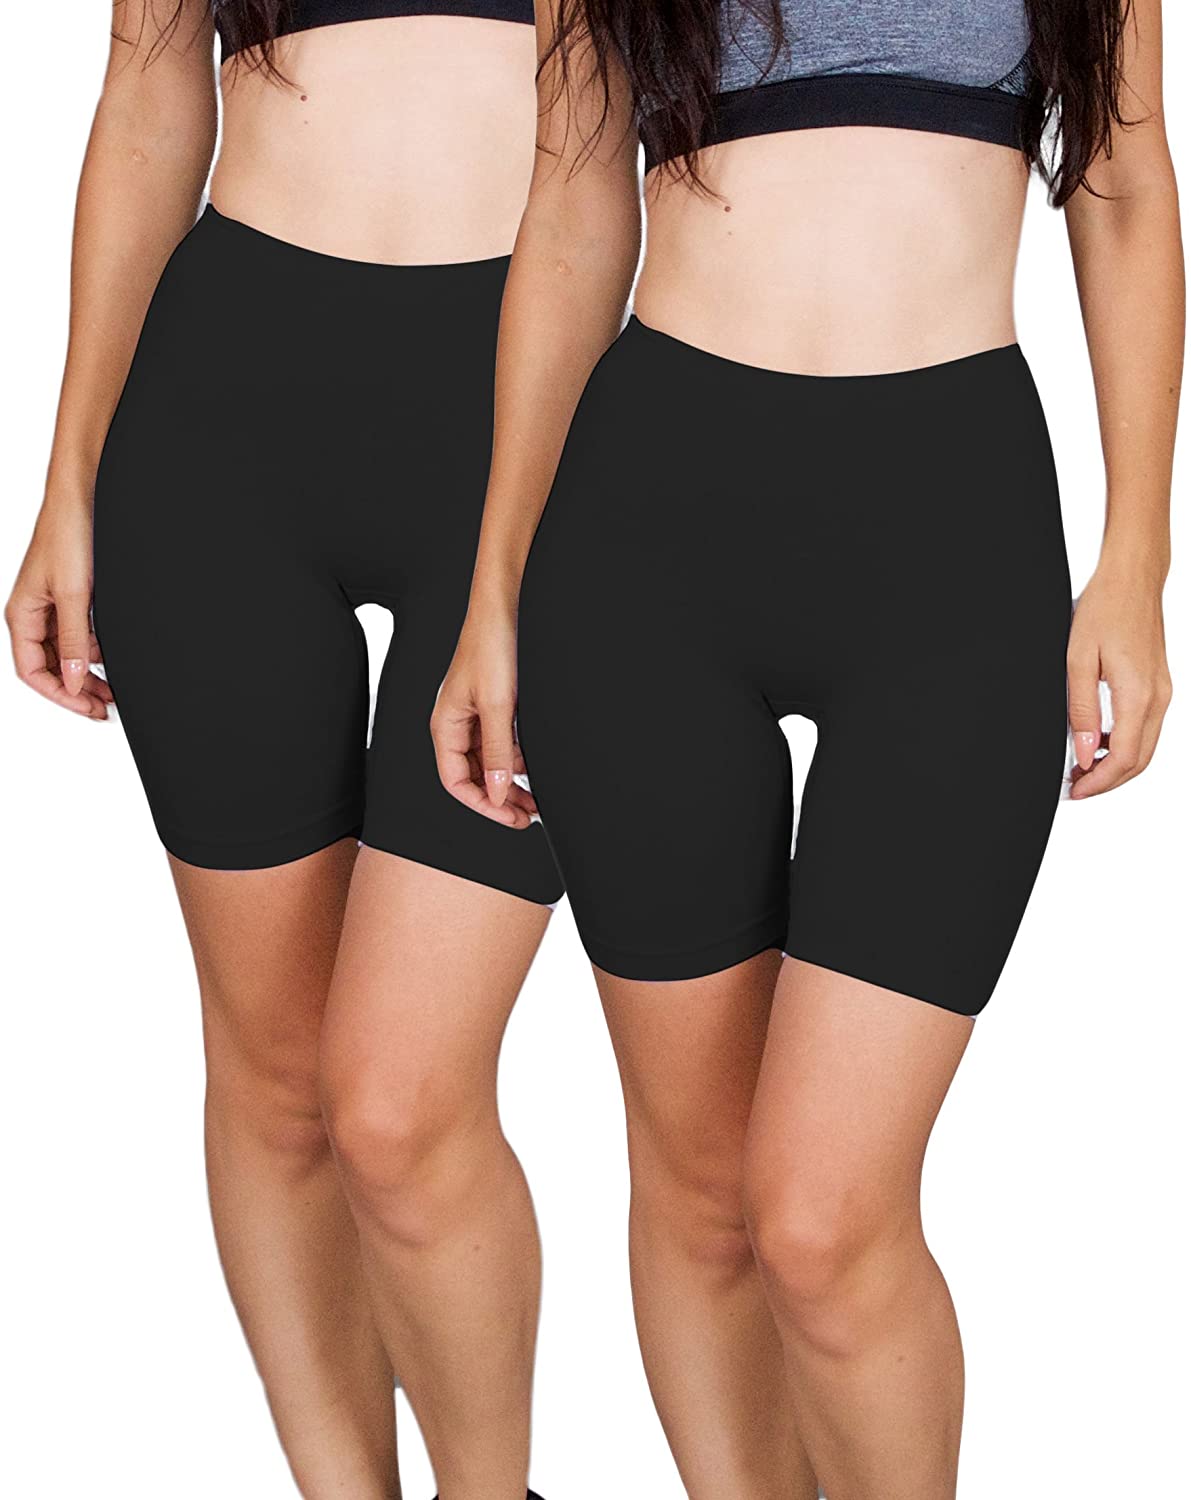 Buy Emprella Biker Shorts for Women, 2 Pack Bike Short, Spandex